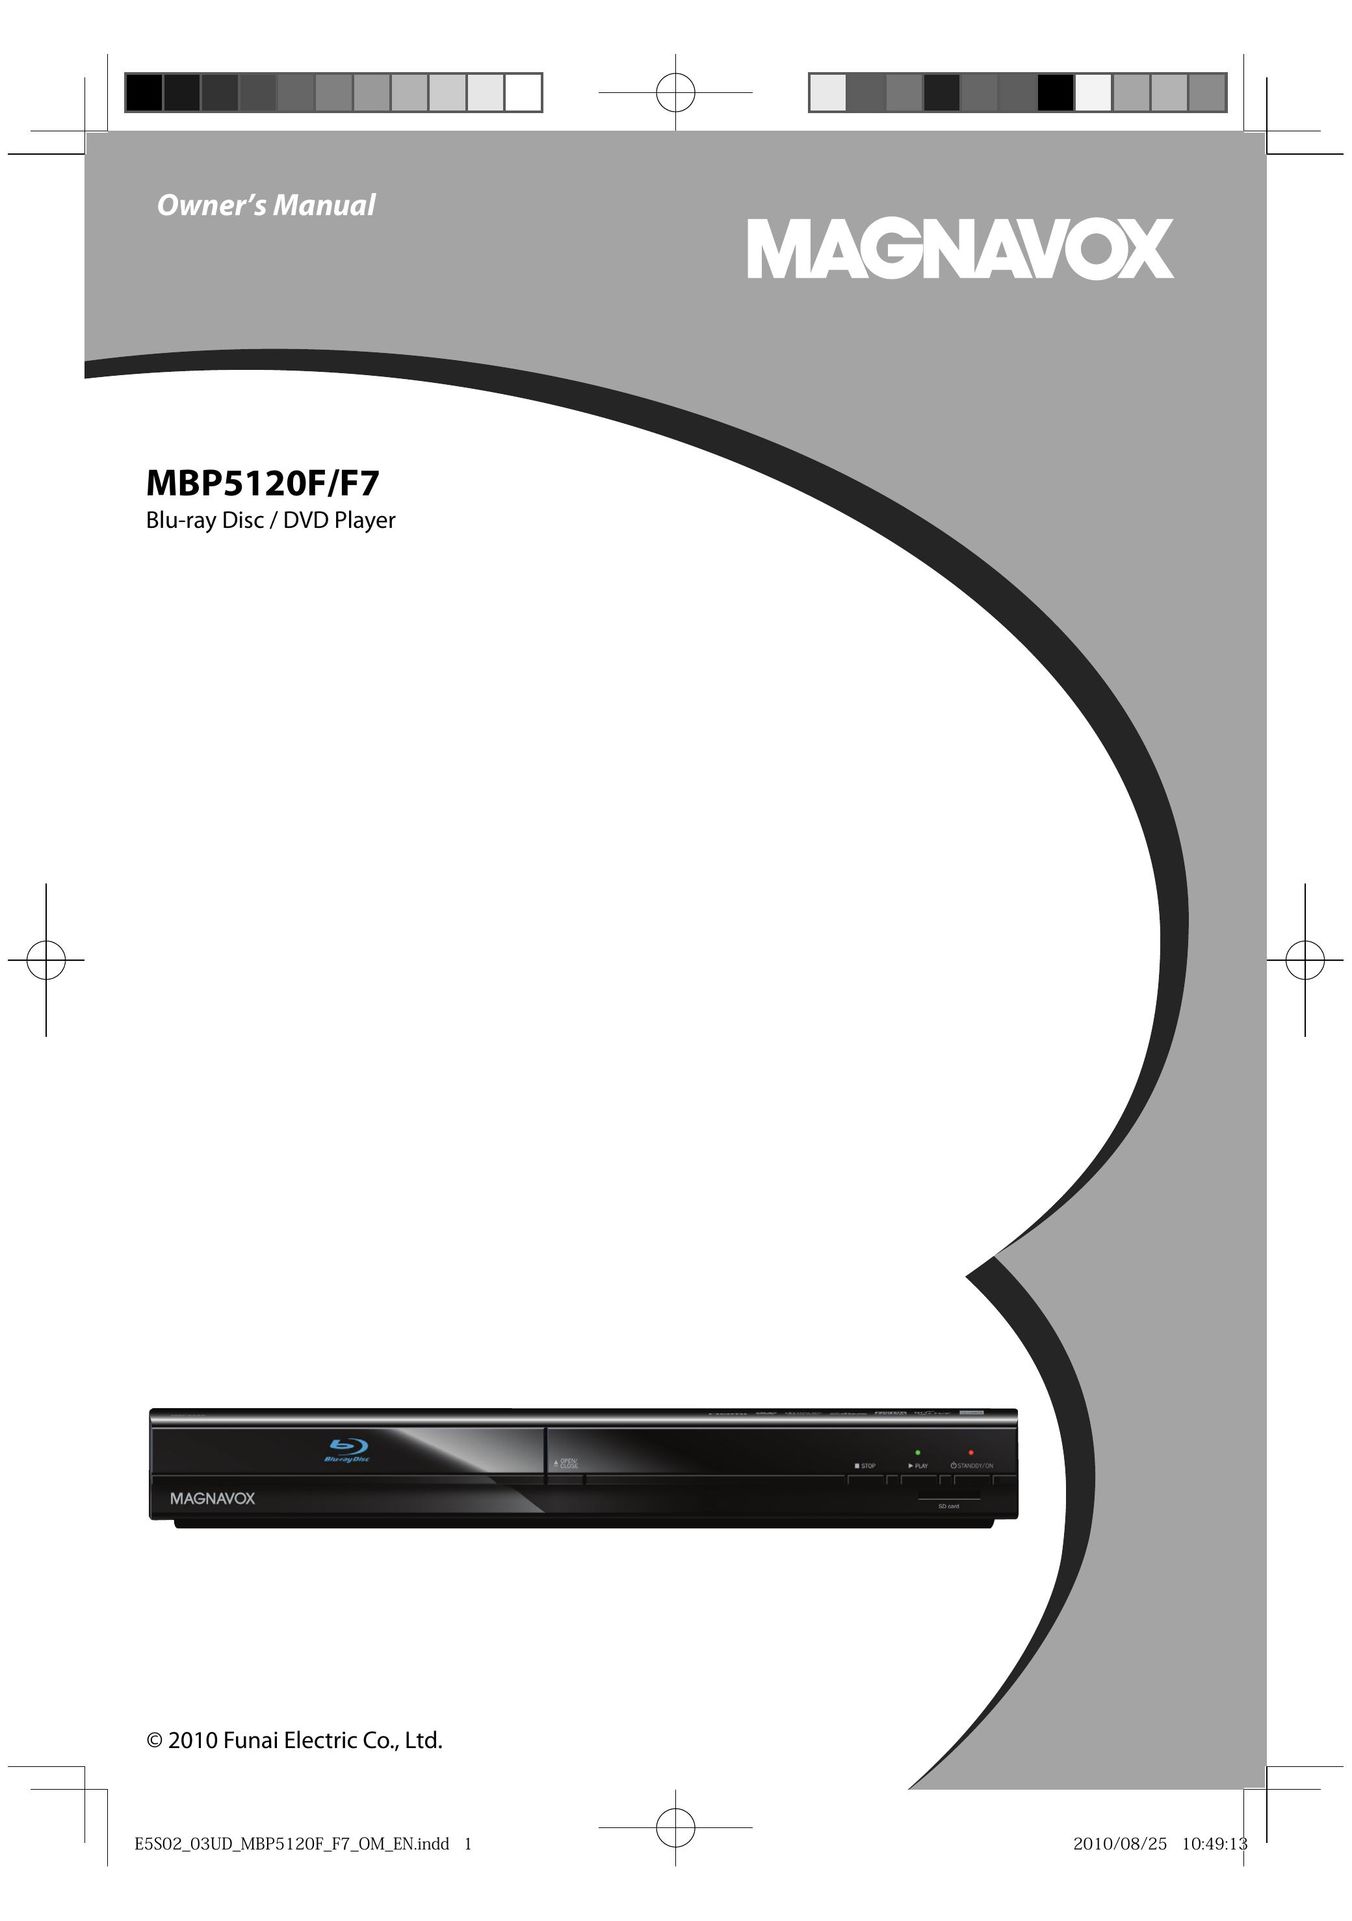 Magnavox F7 Blu-ray Player User Manual